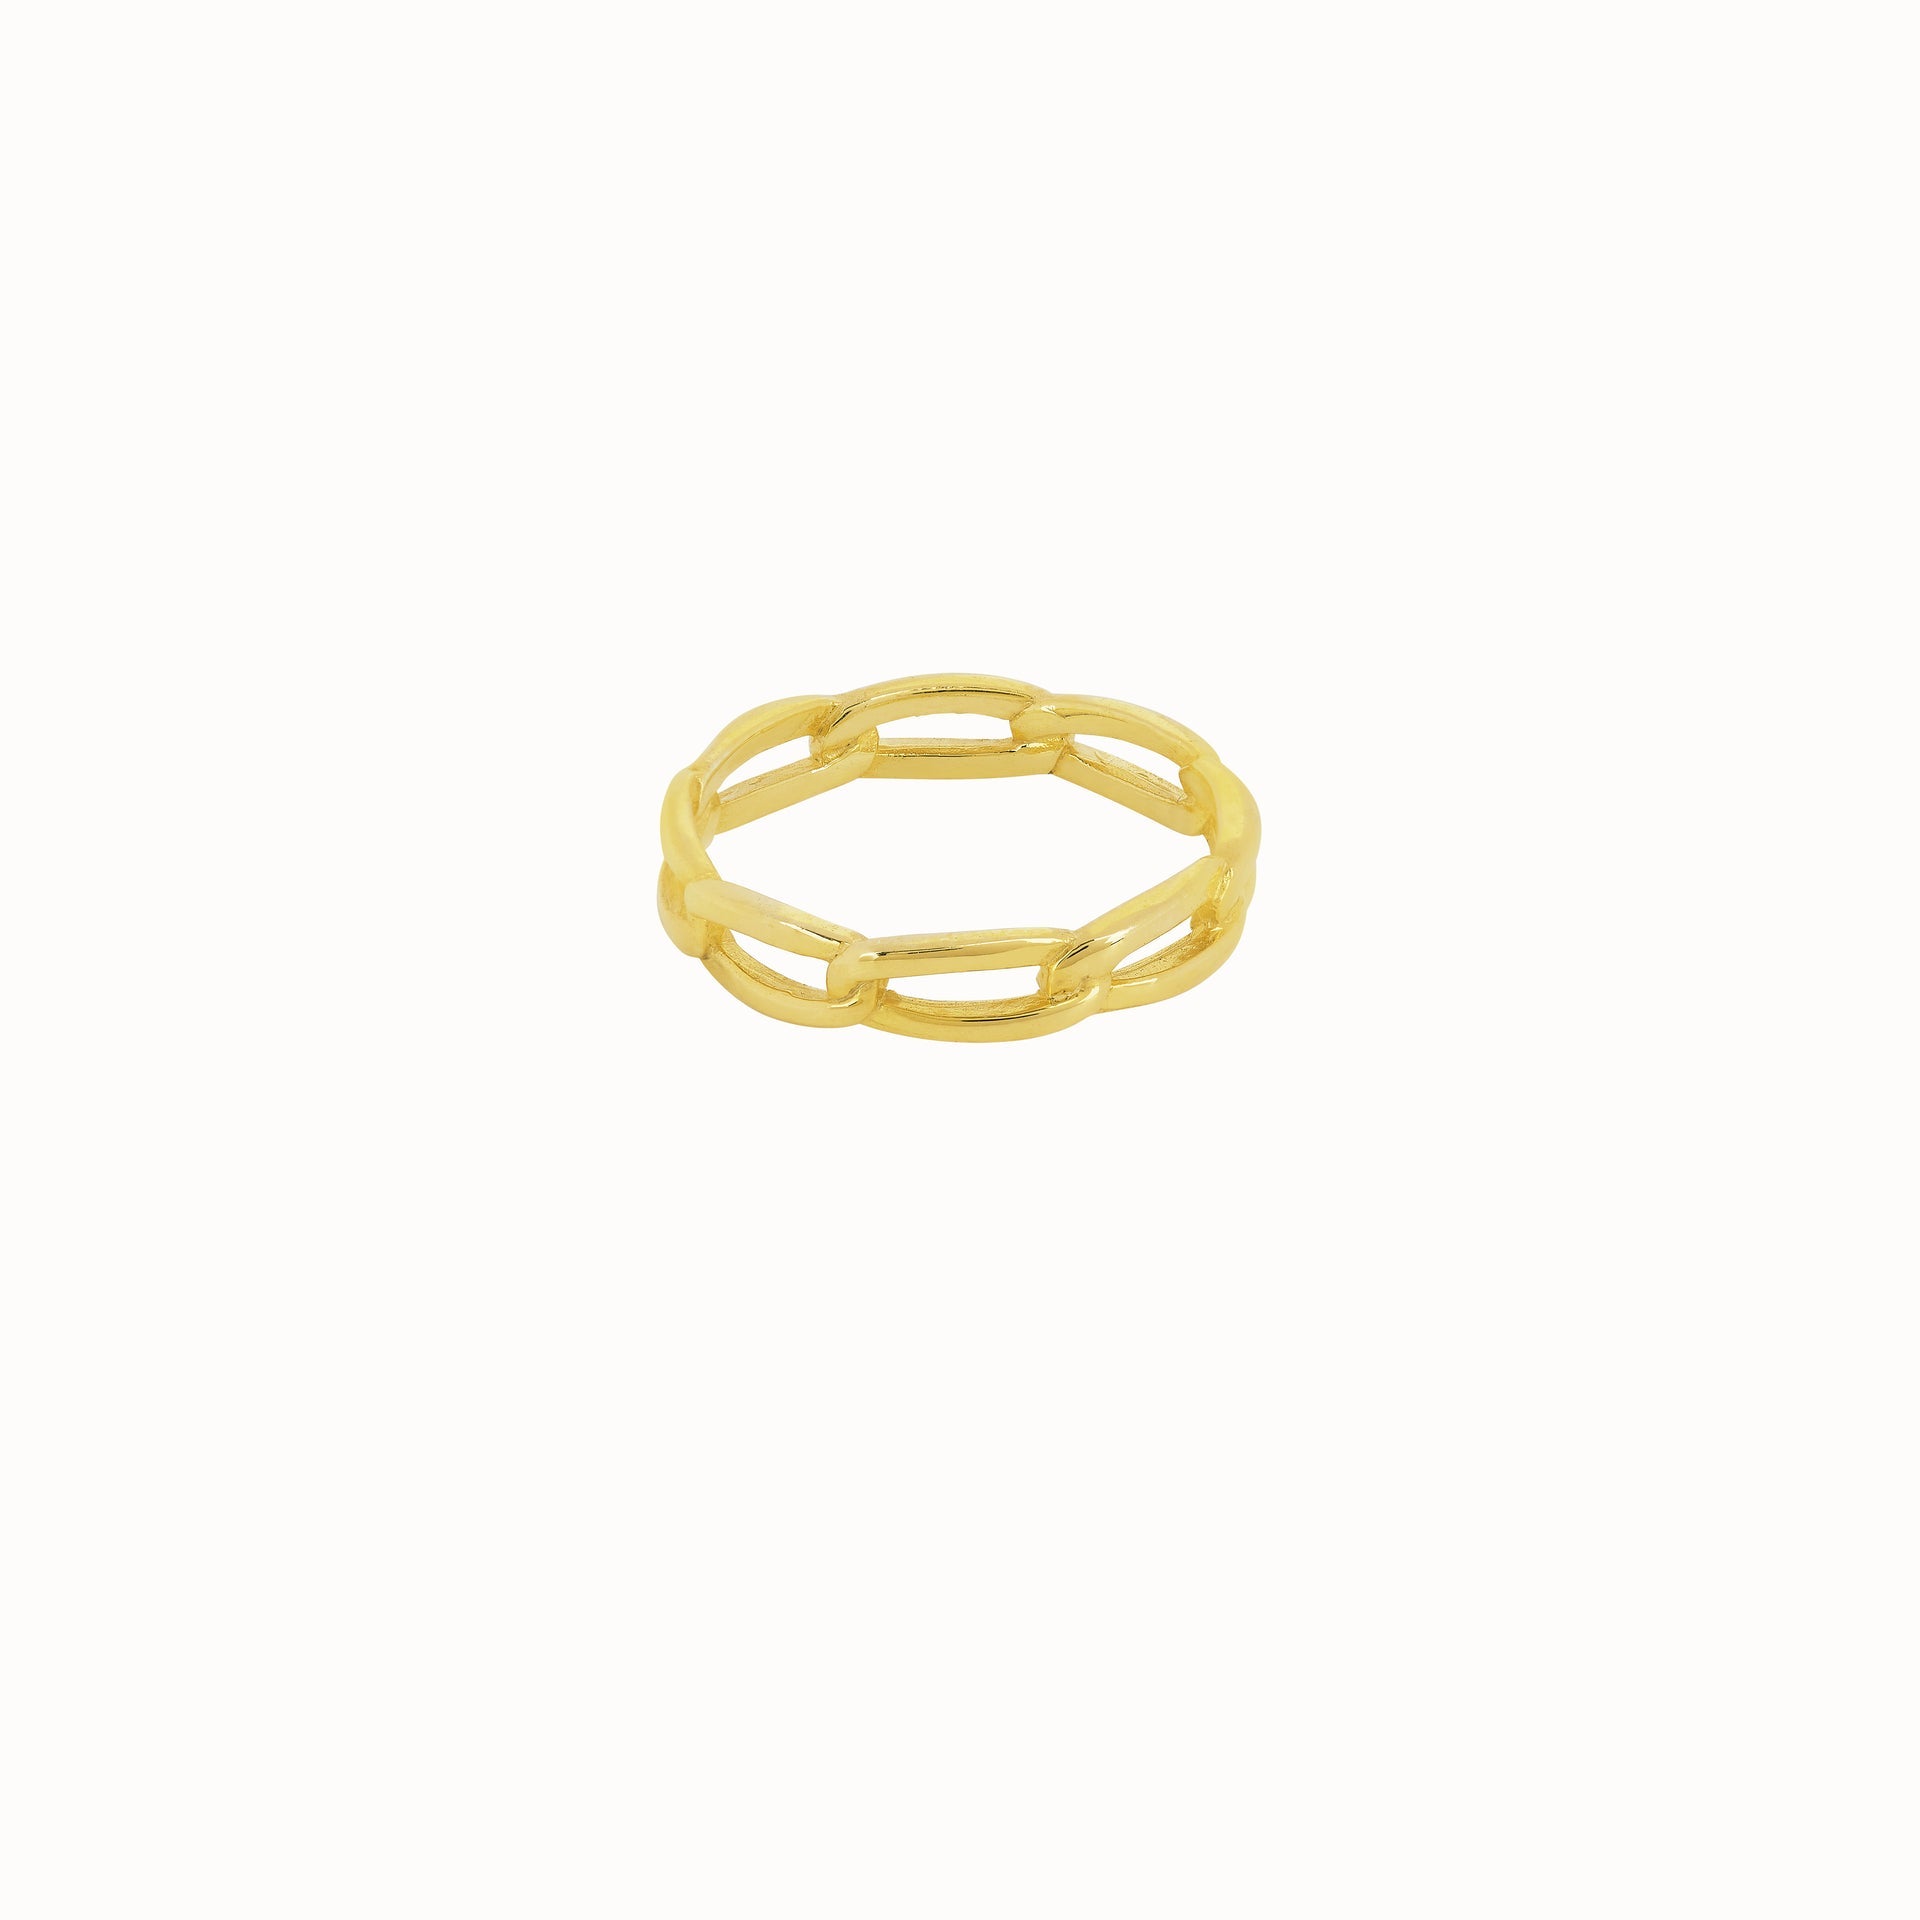 Flawed Estate Ring - Gold